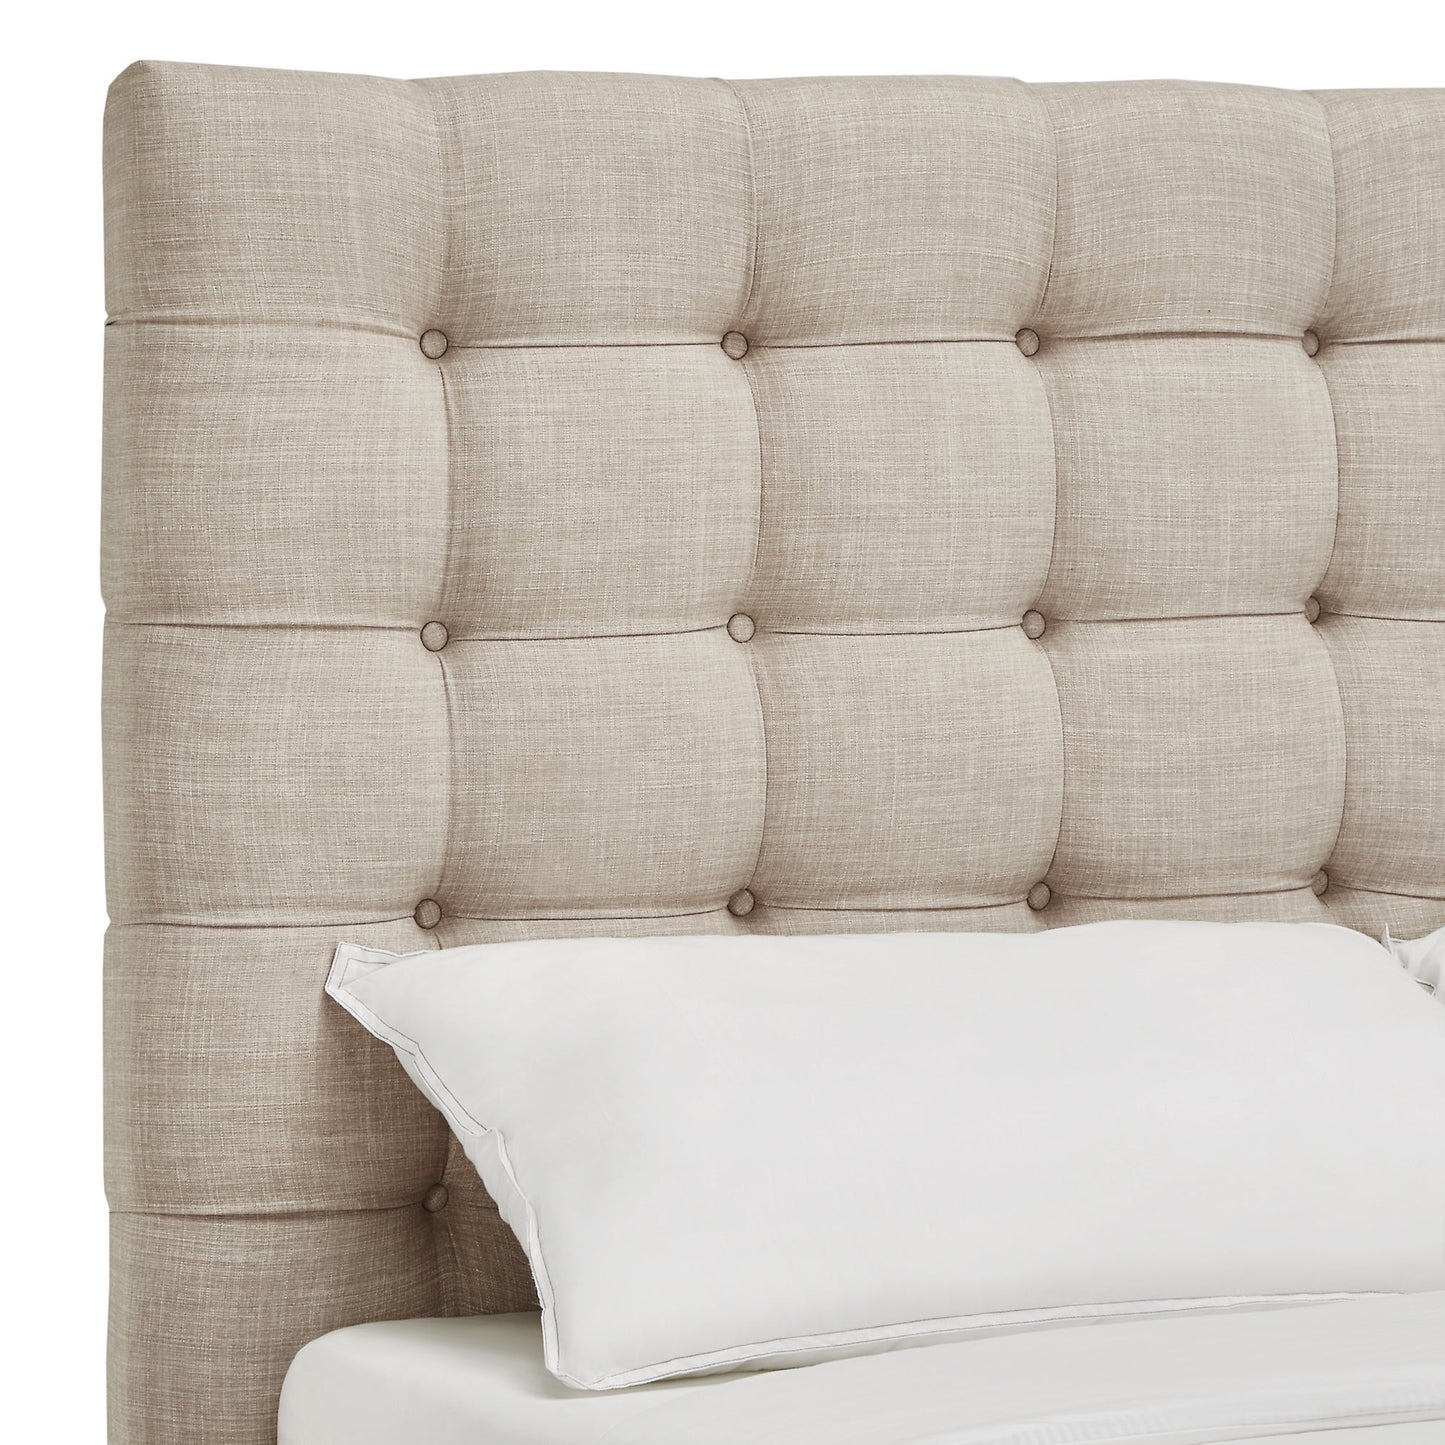 Button Tufted Linen Upholstered Platform Bed - Beige, Queen